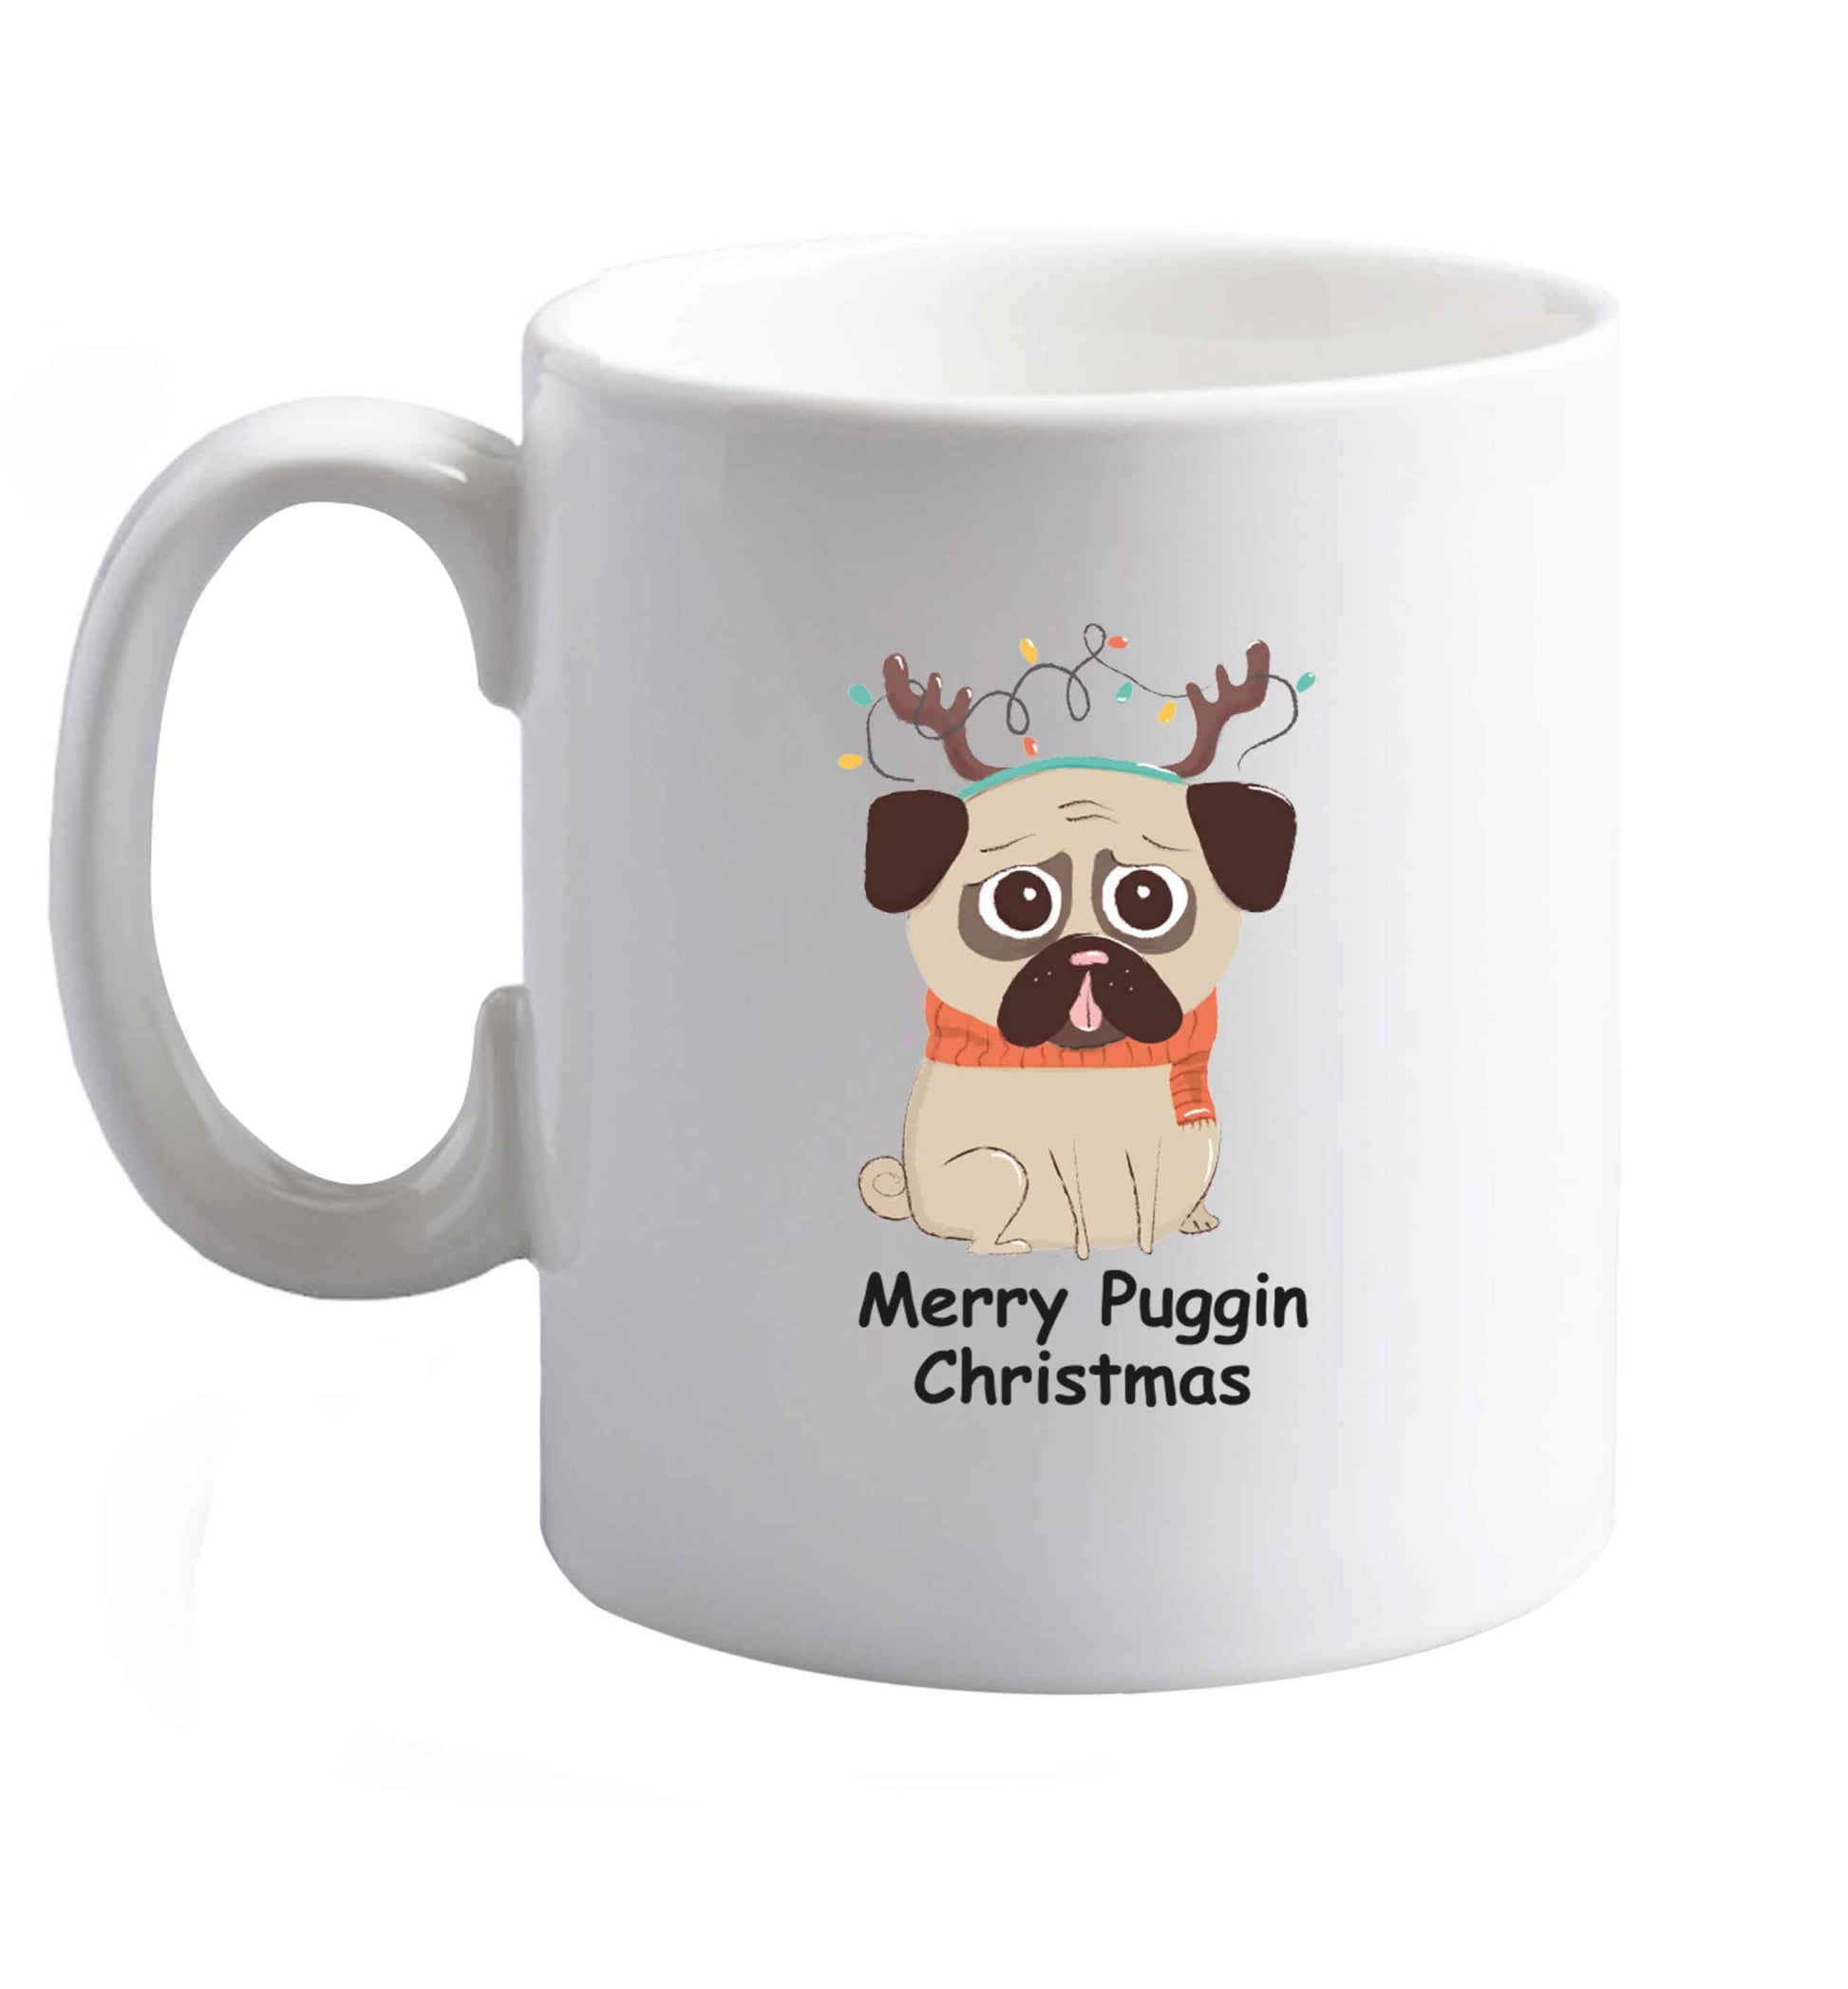 10 oz Merry puggin' Chirstmas ceramic mug right handed